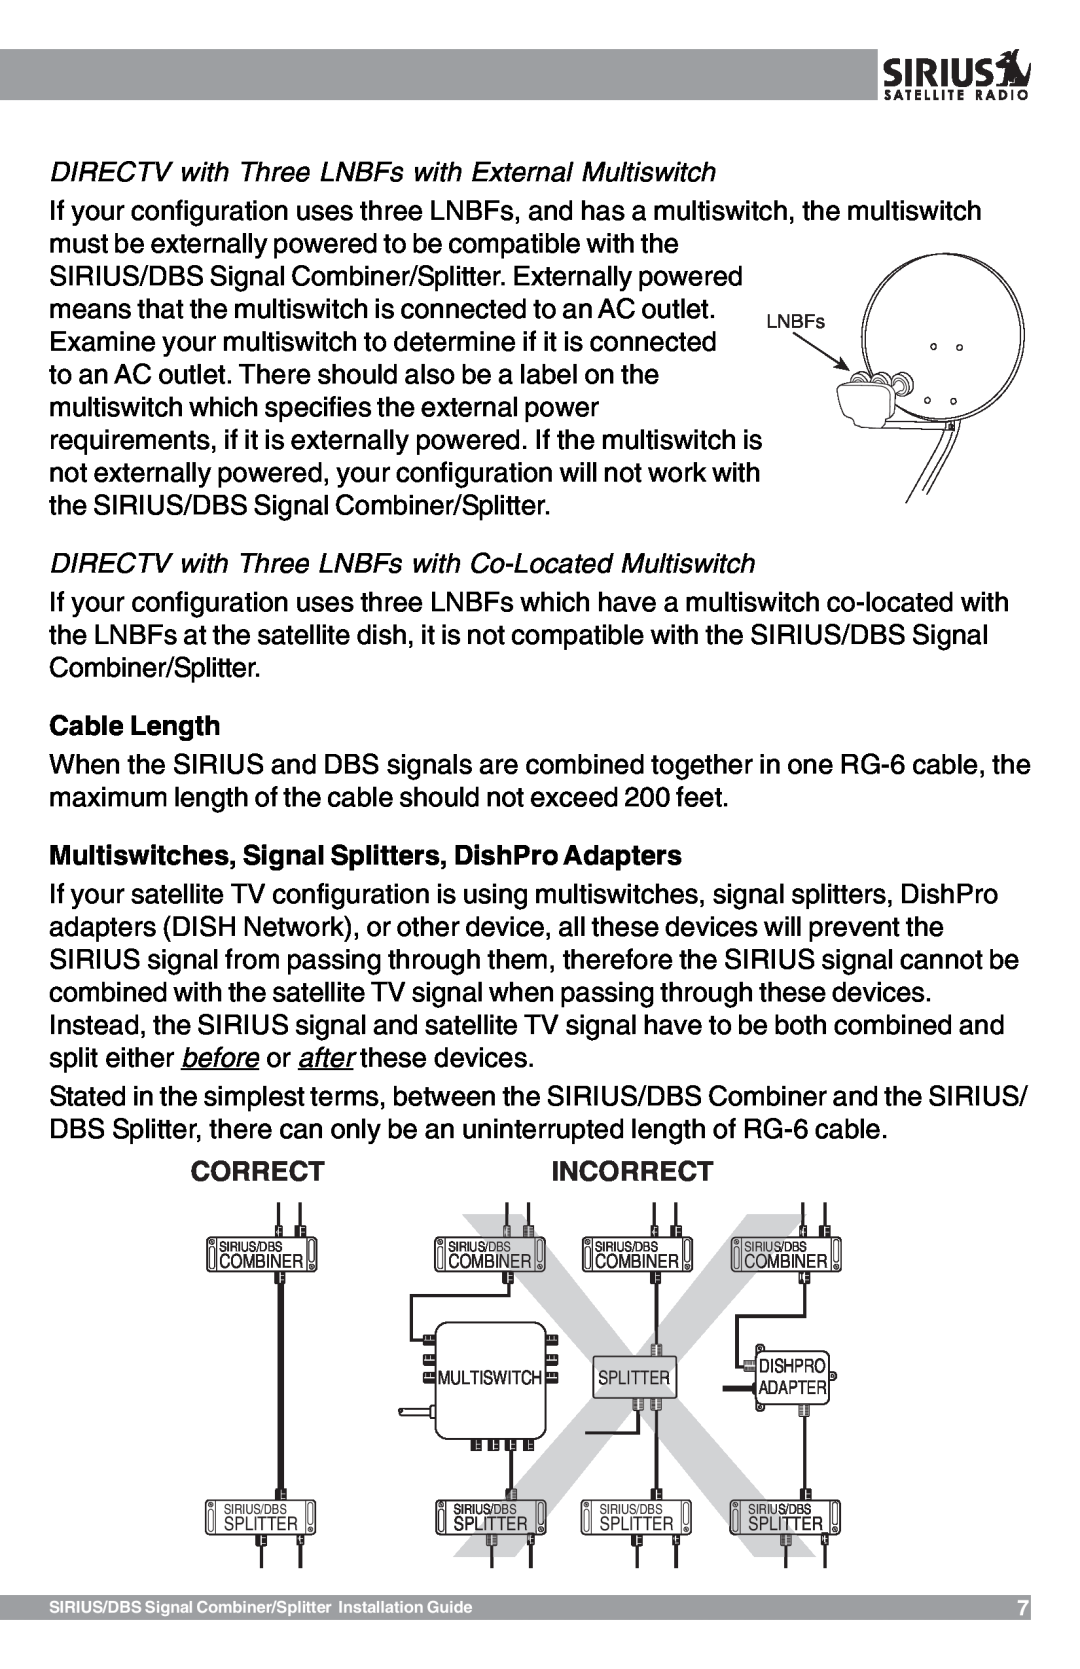 Sirius Satellite Radio SR-100C manual Cable Length, Multiswitches, Signal Splitters, DishPro Adapters, Correctincorrect 